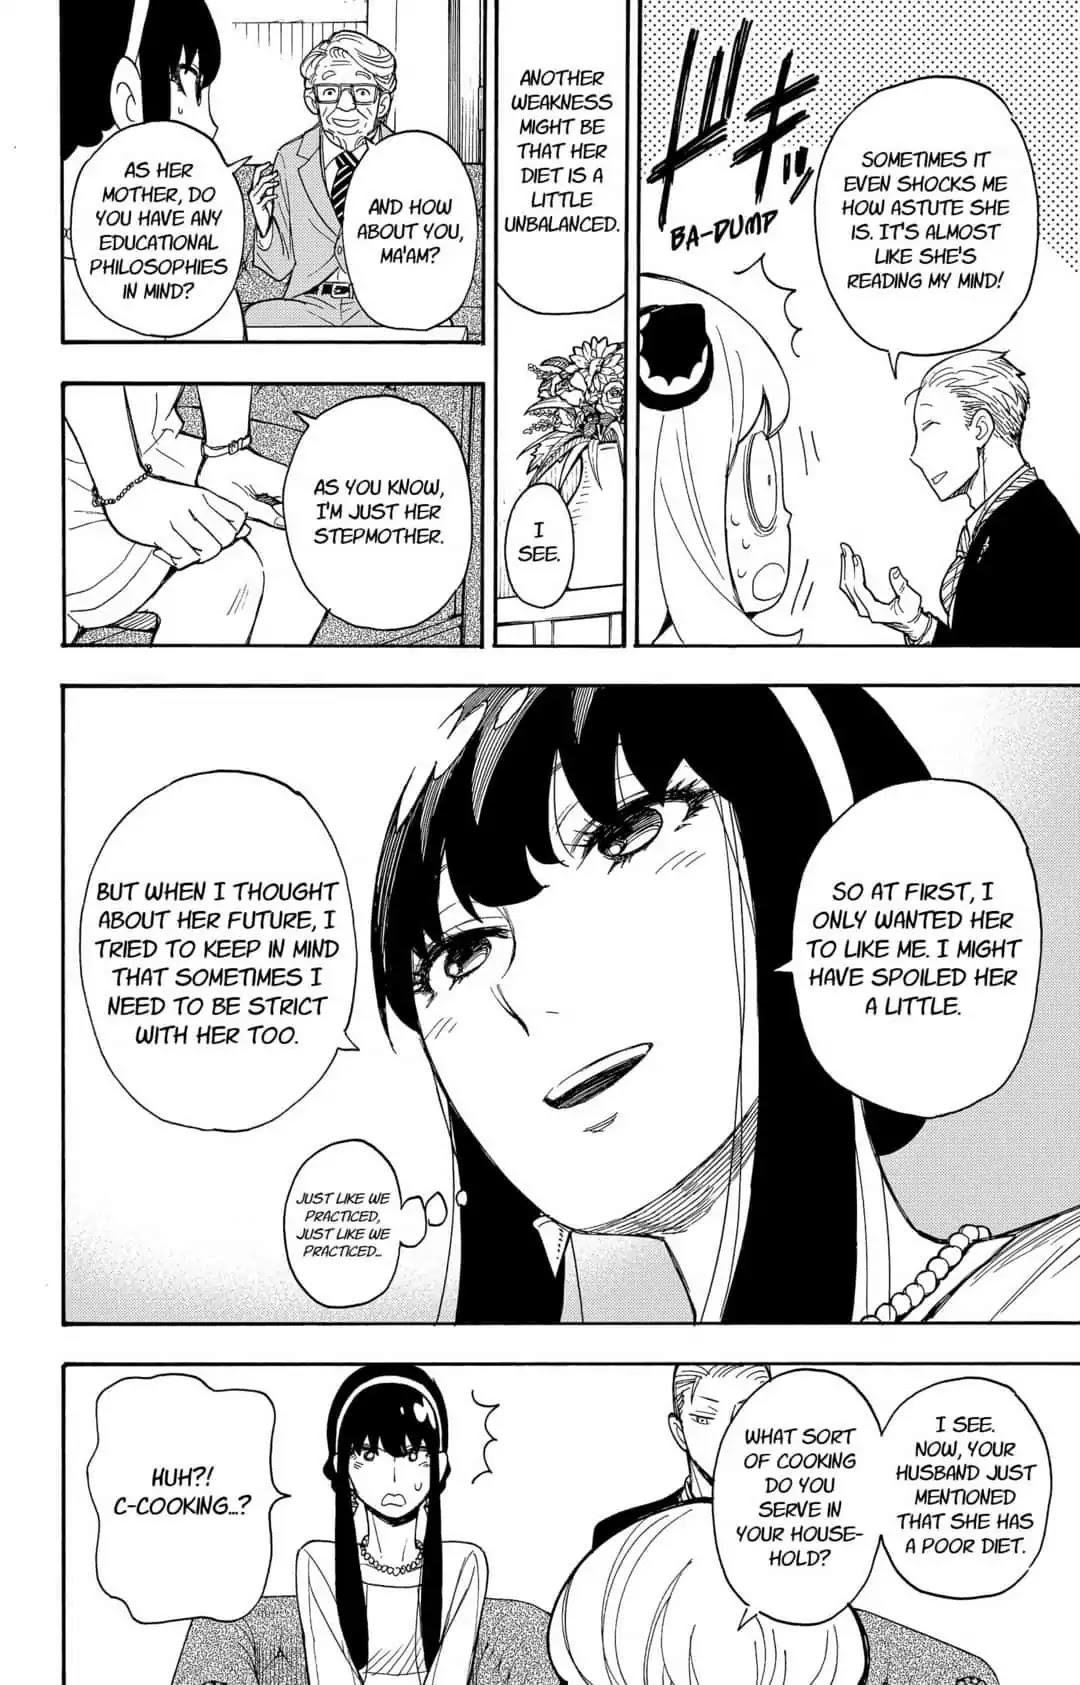 Spy X Family Chapter 5: Mission: 5 page 8 - Mangakakalot